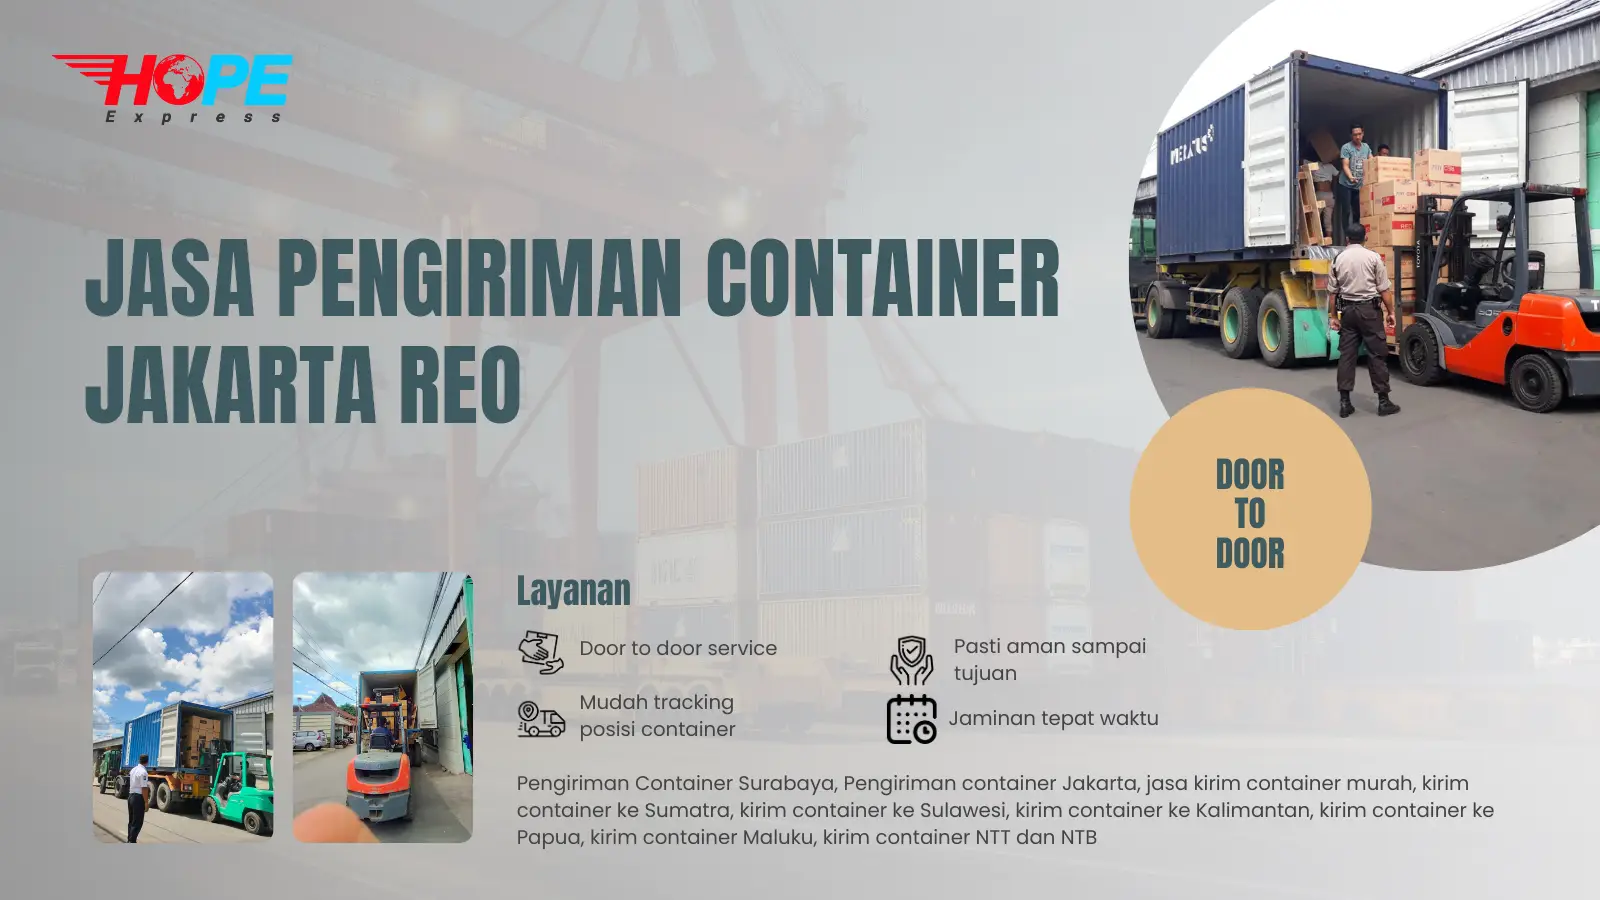 Jasa Pengiriman Container Jakarta Reo